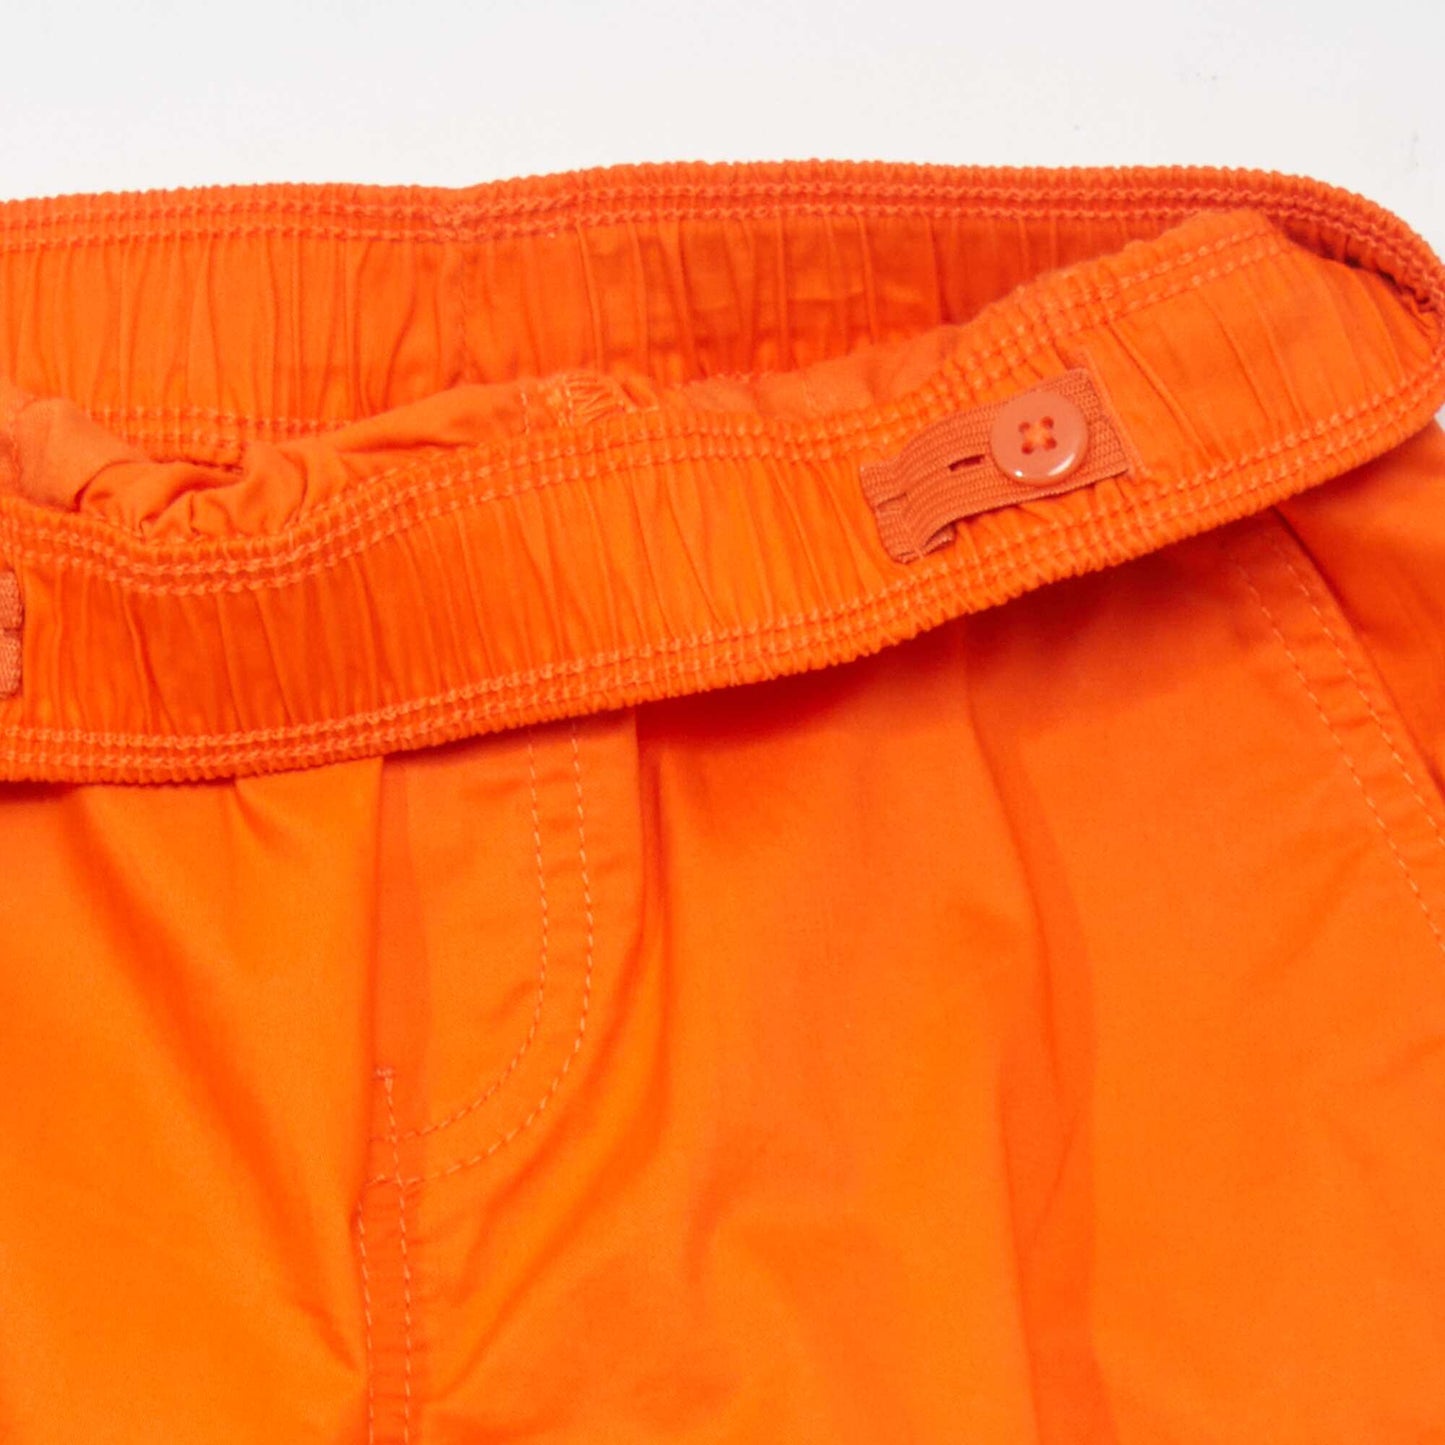 Regular-fit twill Bermuda shorts ORANGE